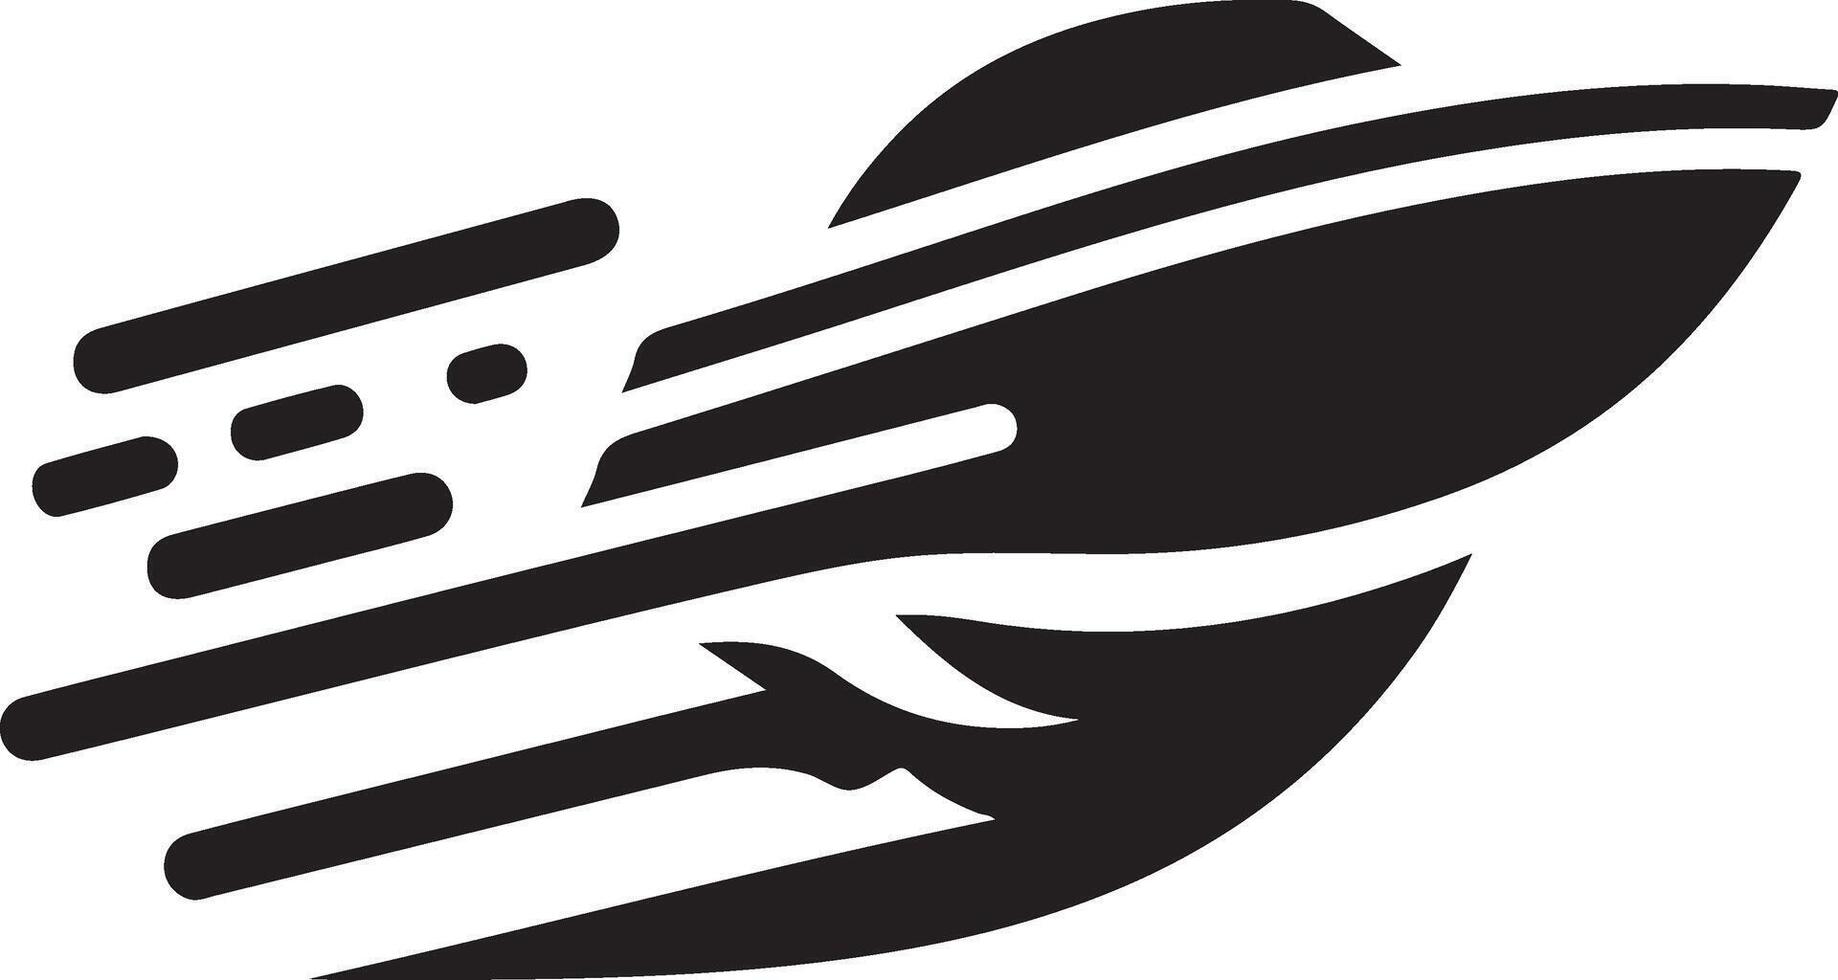 minimal speed boat vector logo concept icon, clipart, symbol, black color silhouette 6